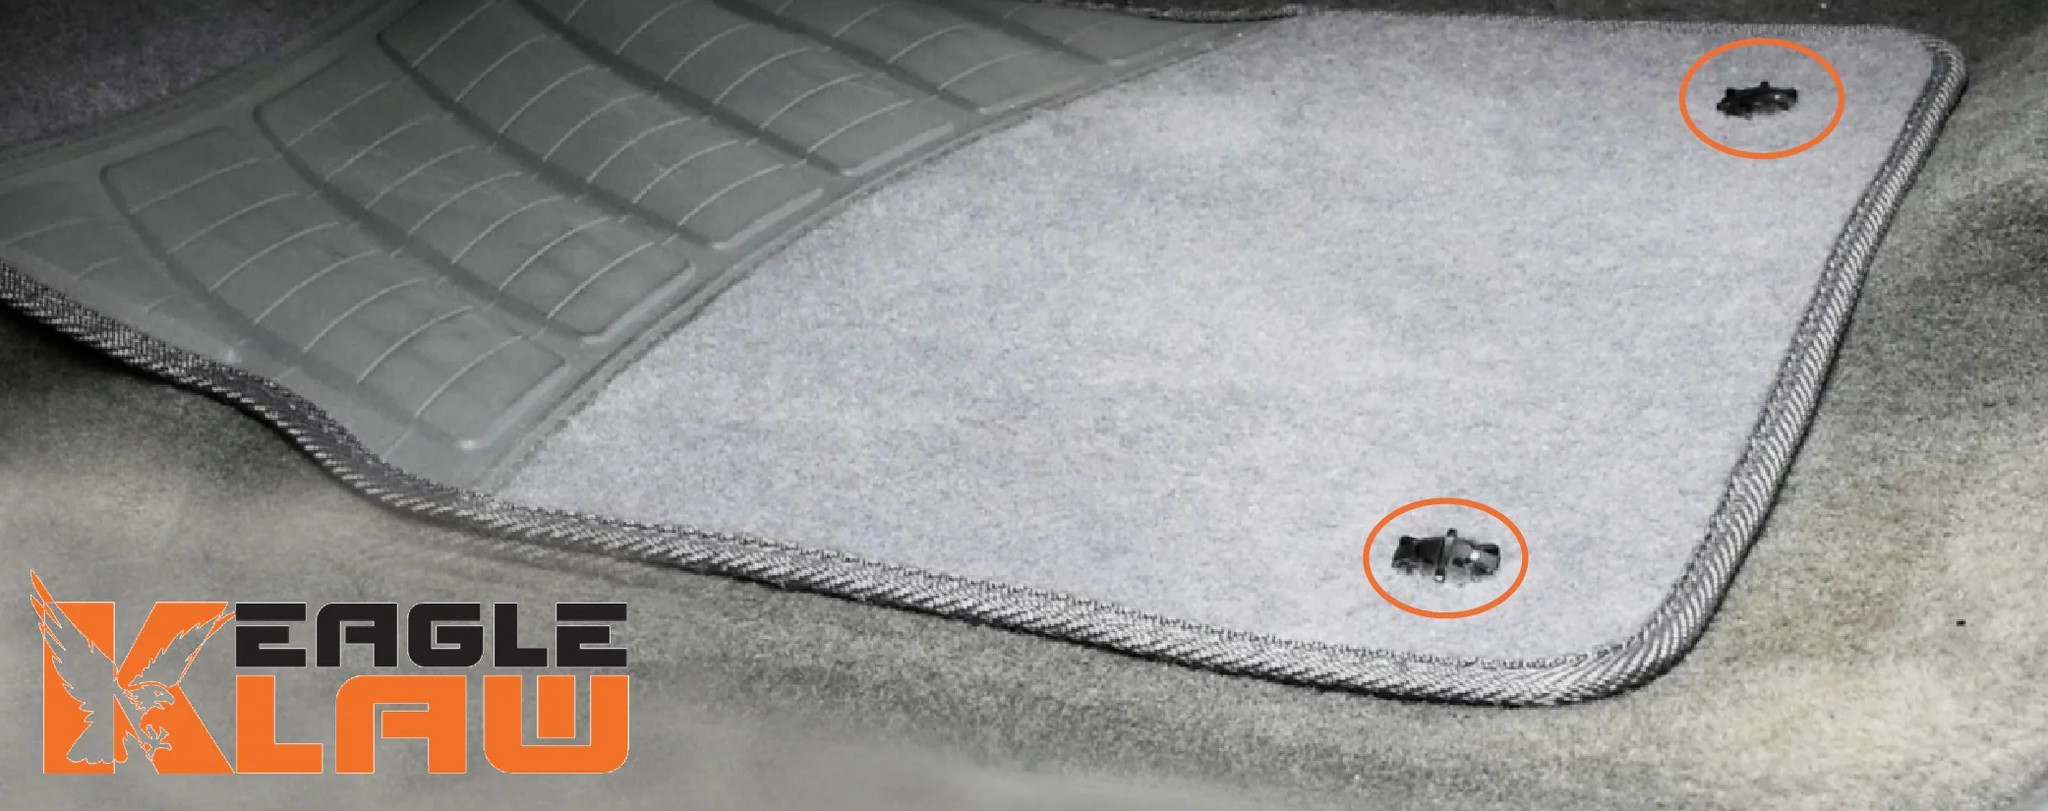 Floor Mat Anti-Slip Fastener Clips